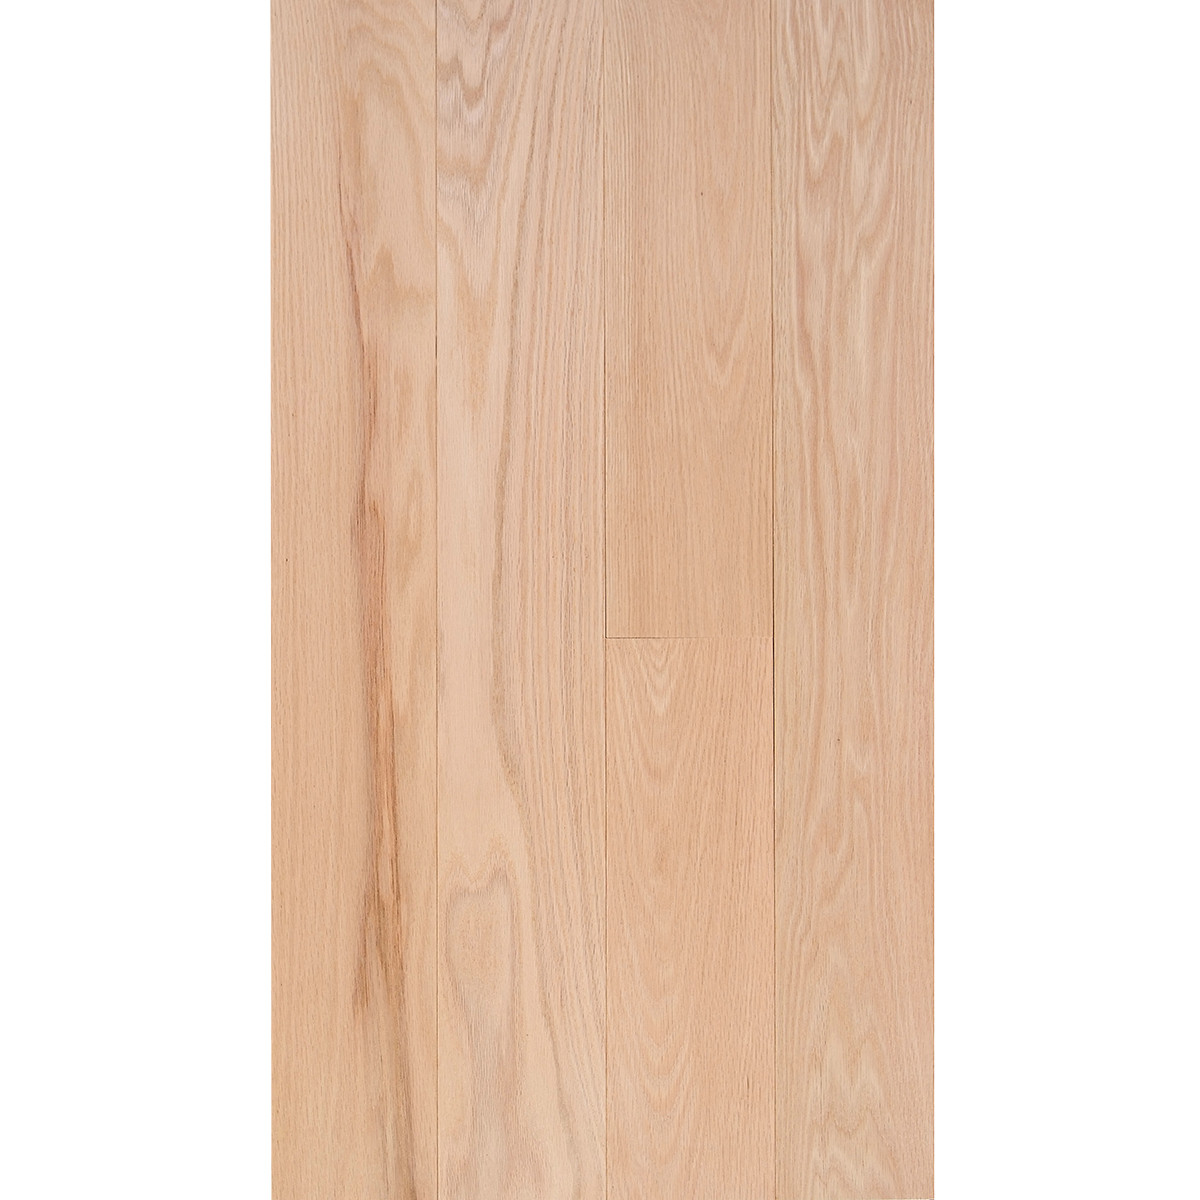 24 Lovable Hardwood Floor Cost Per Foot 2024 free download hardwood floor cost per foot of red oak 3 4 x 5 select grade flooring in fs 5 redoak select em flooring